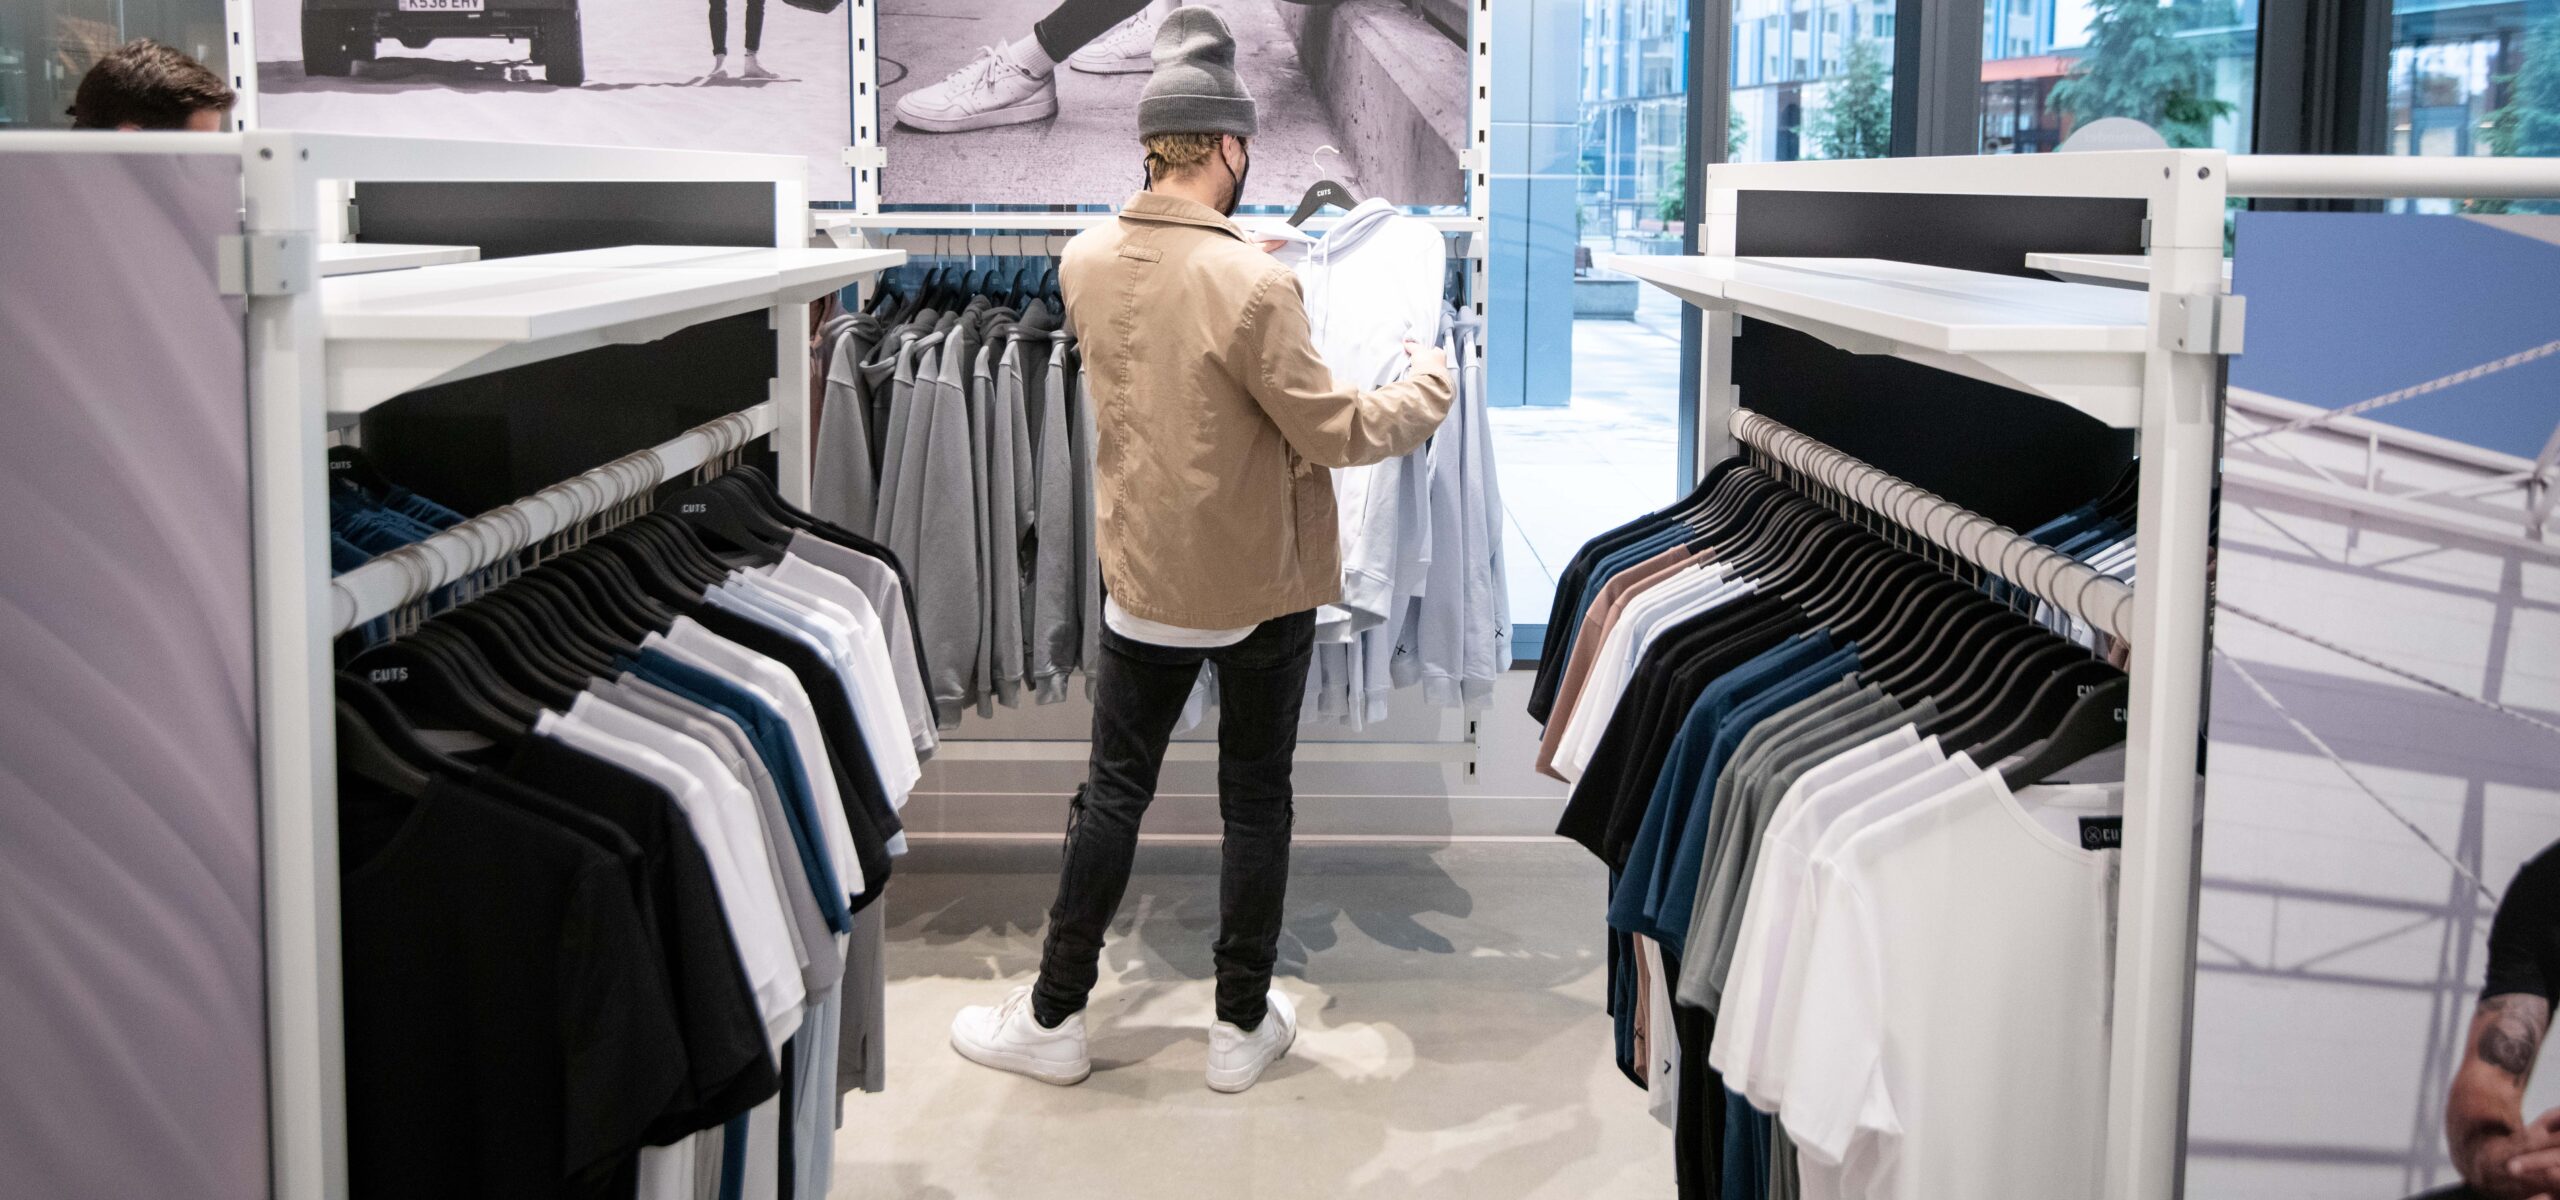 Man browsing shirts on a display rack.